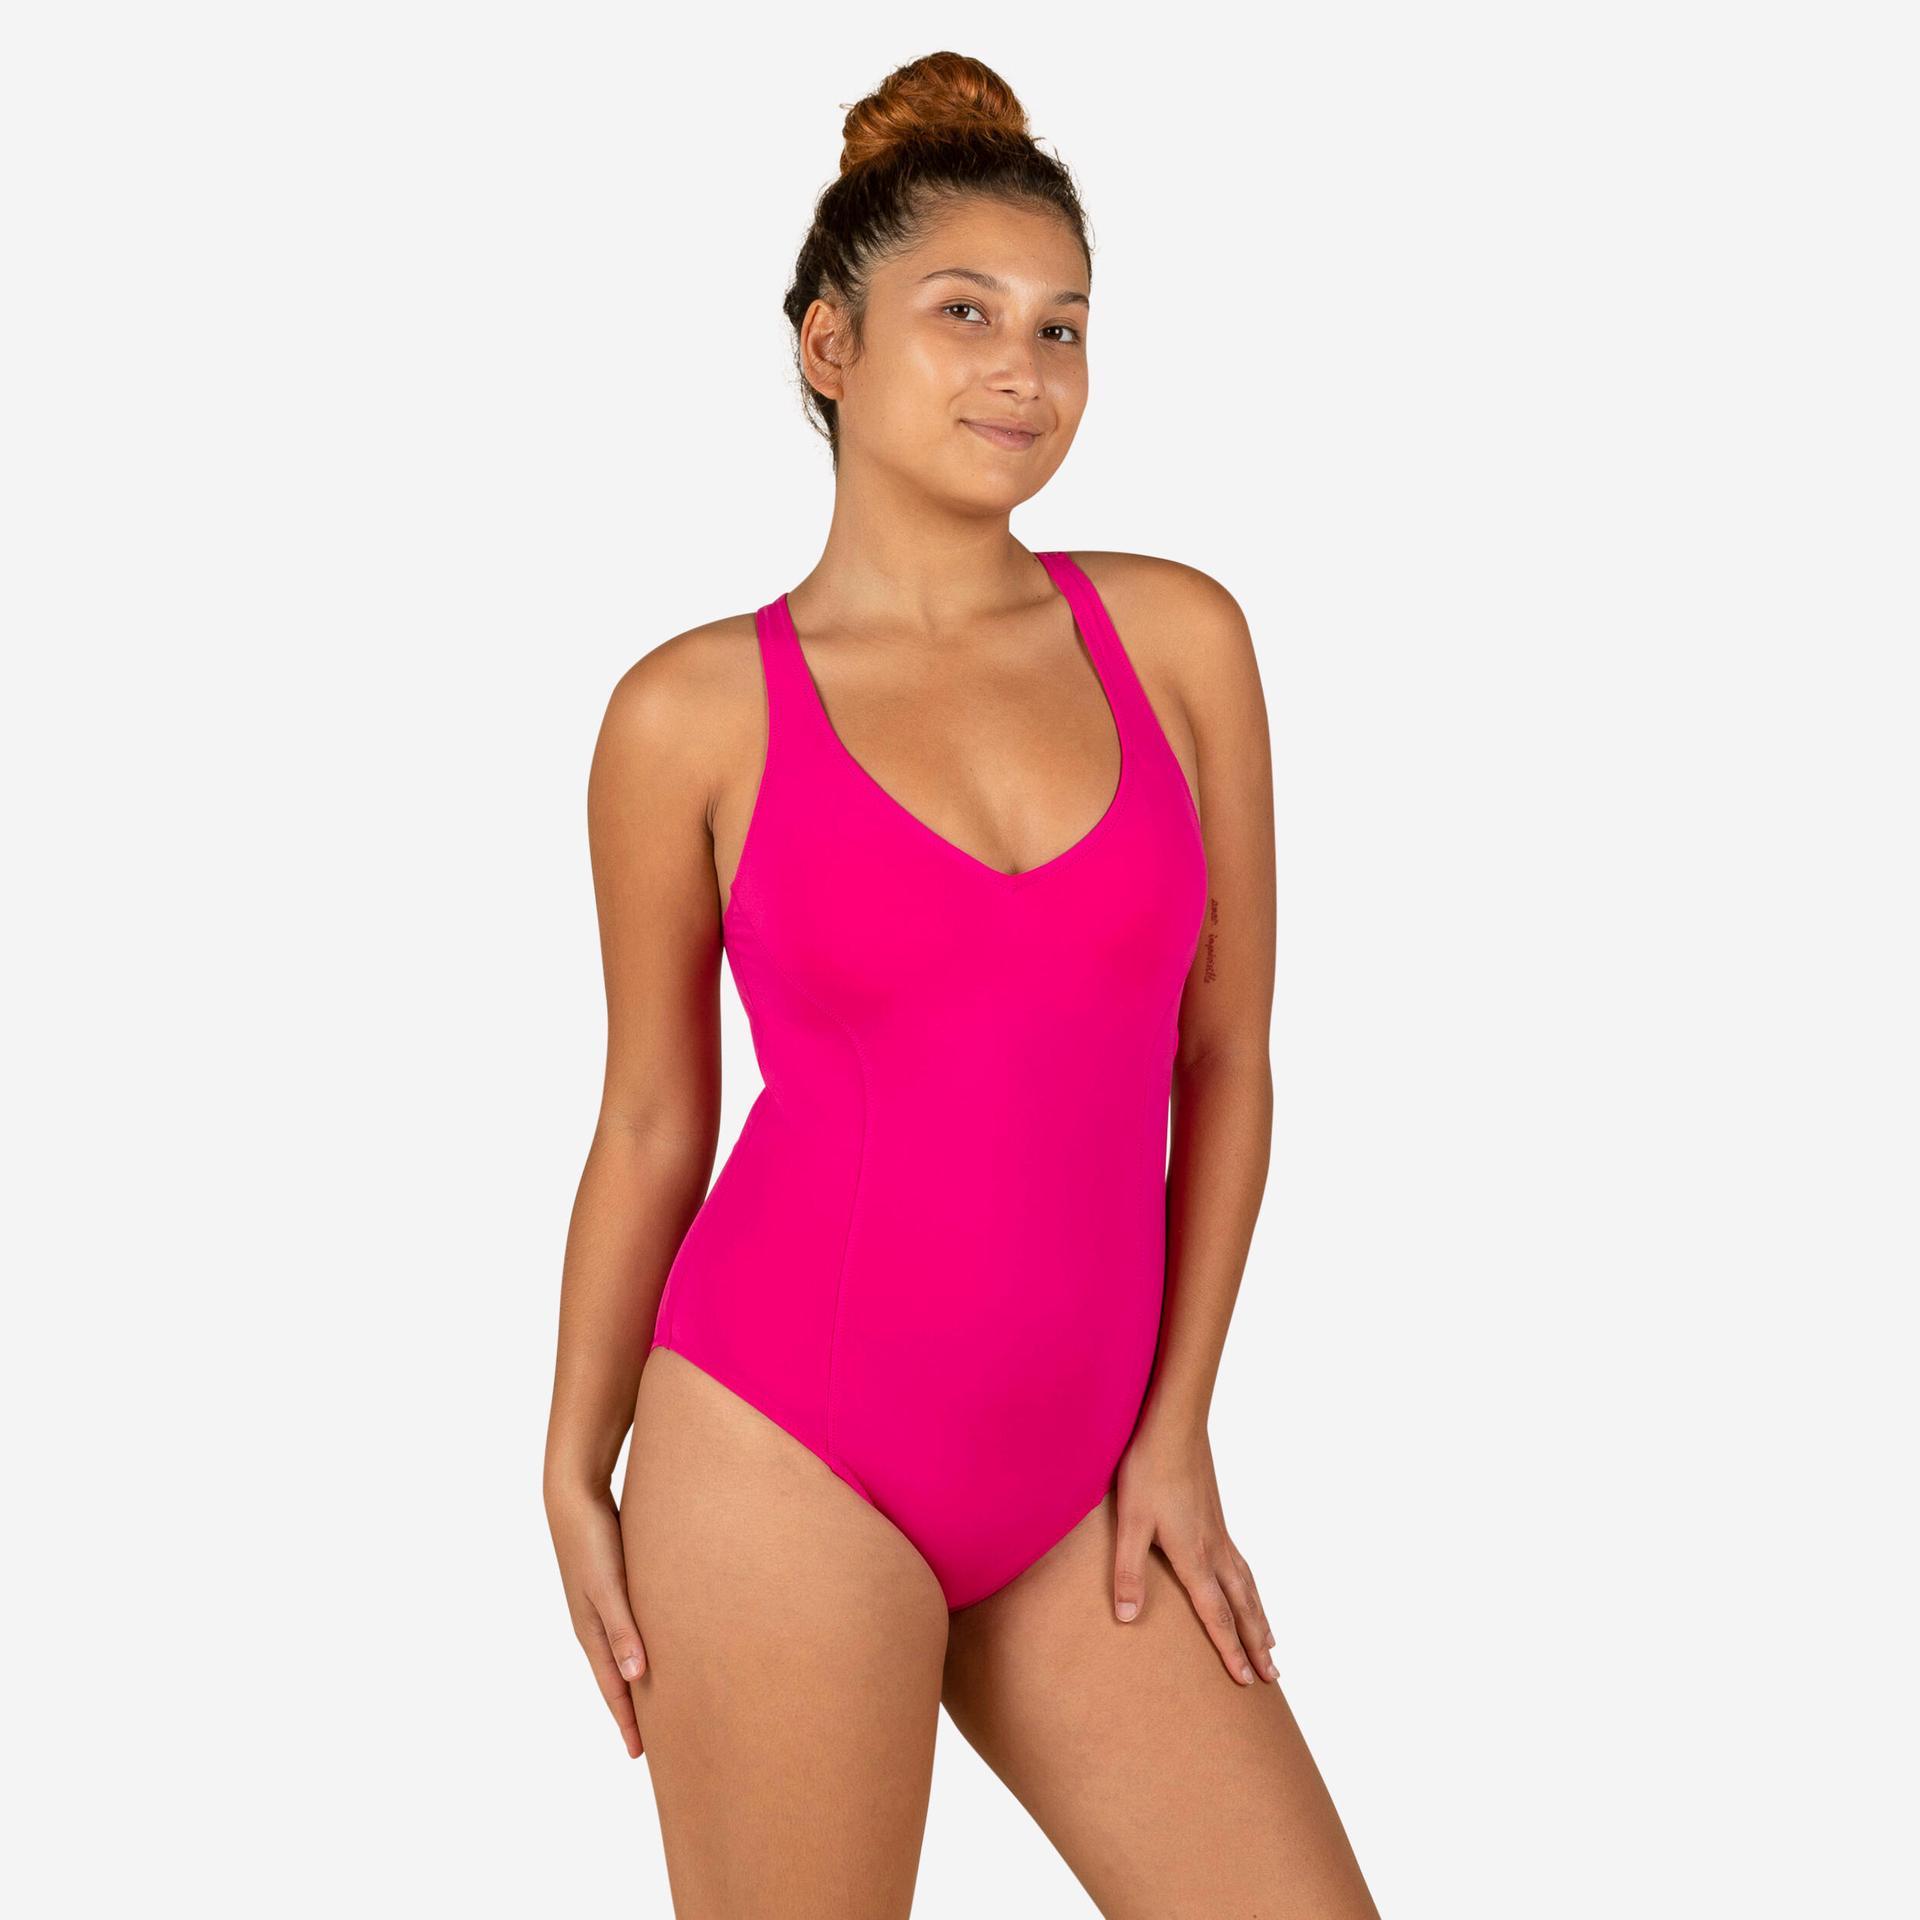 women's-swimming-one-piece-swimsuit-pearl-rose-fuchsia